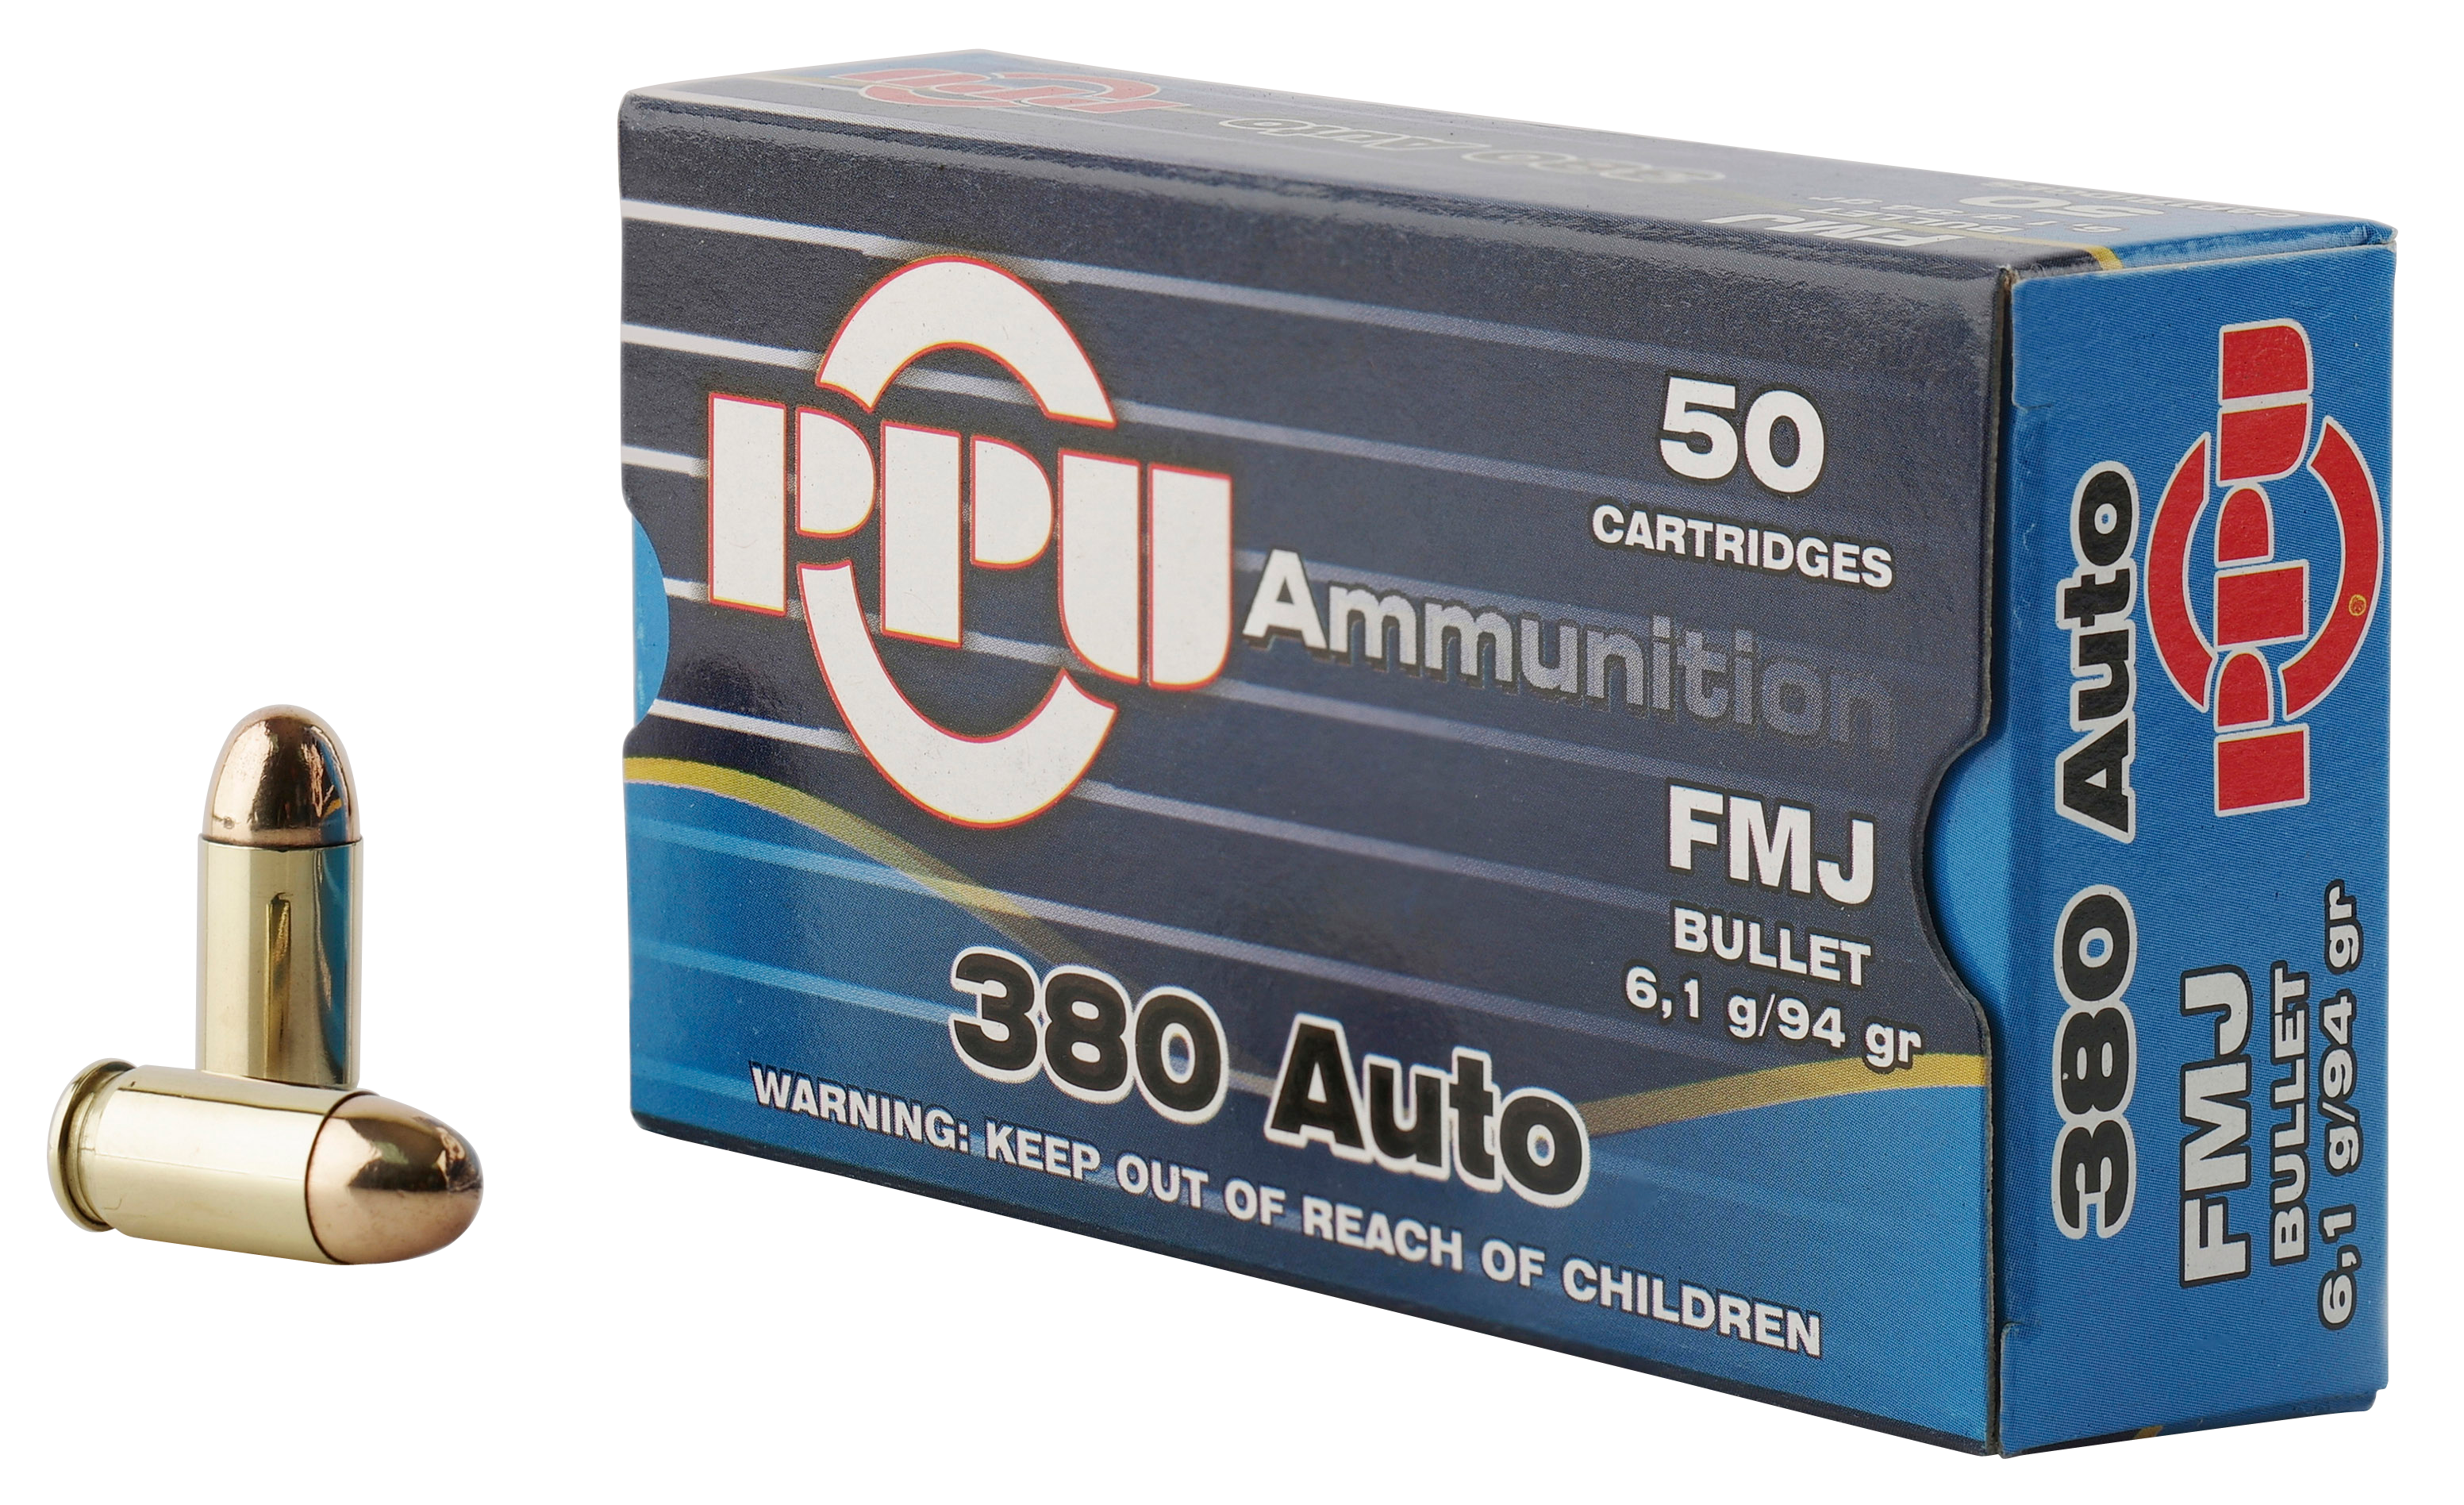 PPU Automatic Colt ACP FMJ Ammo